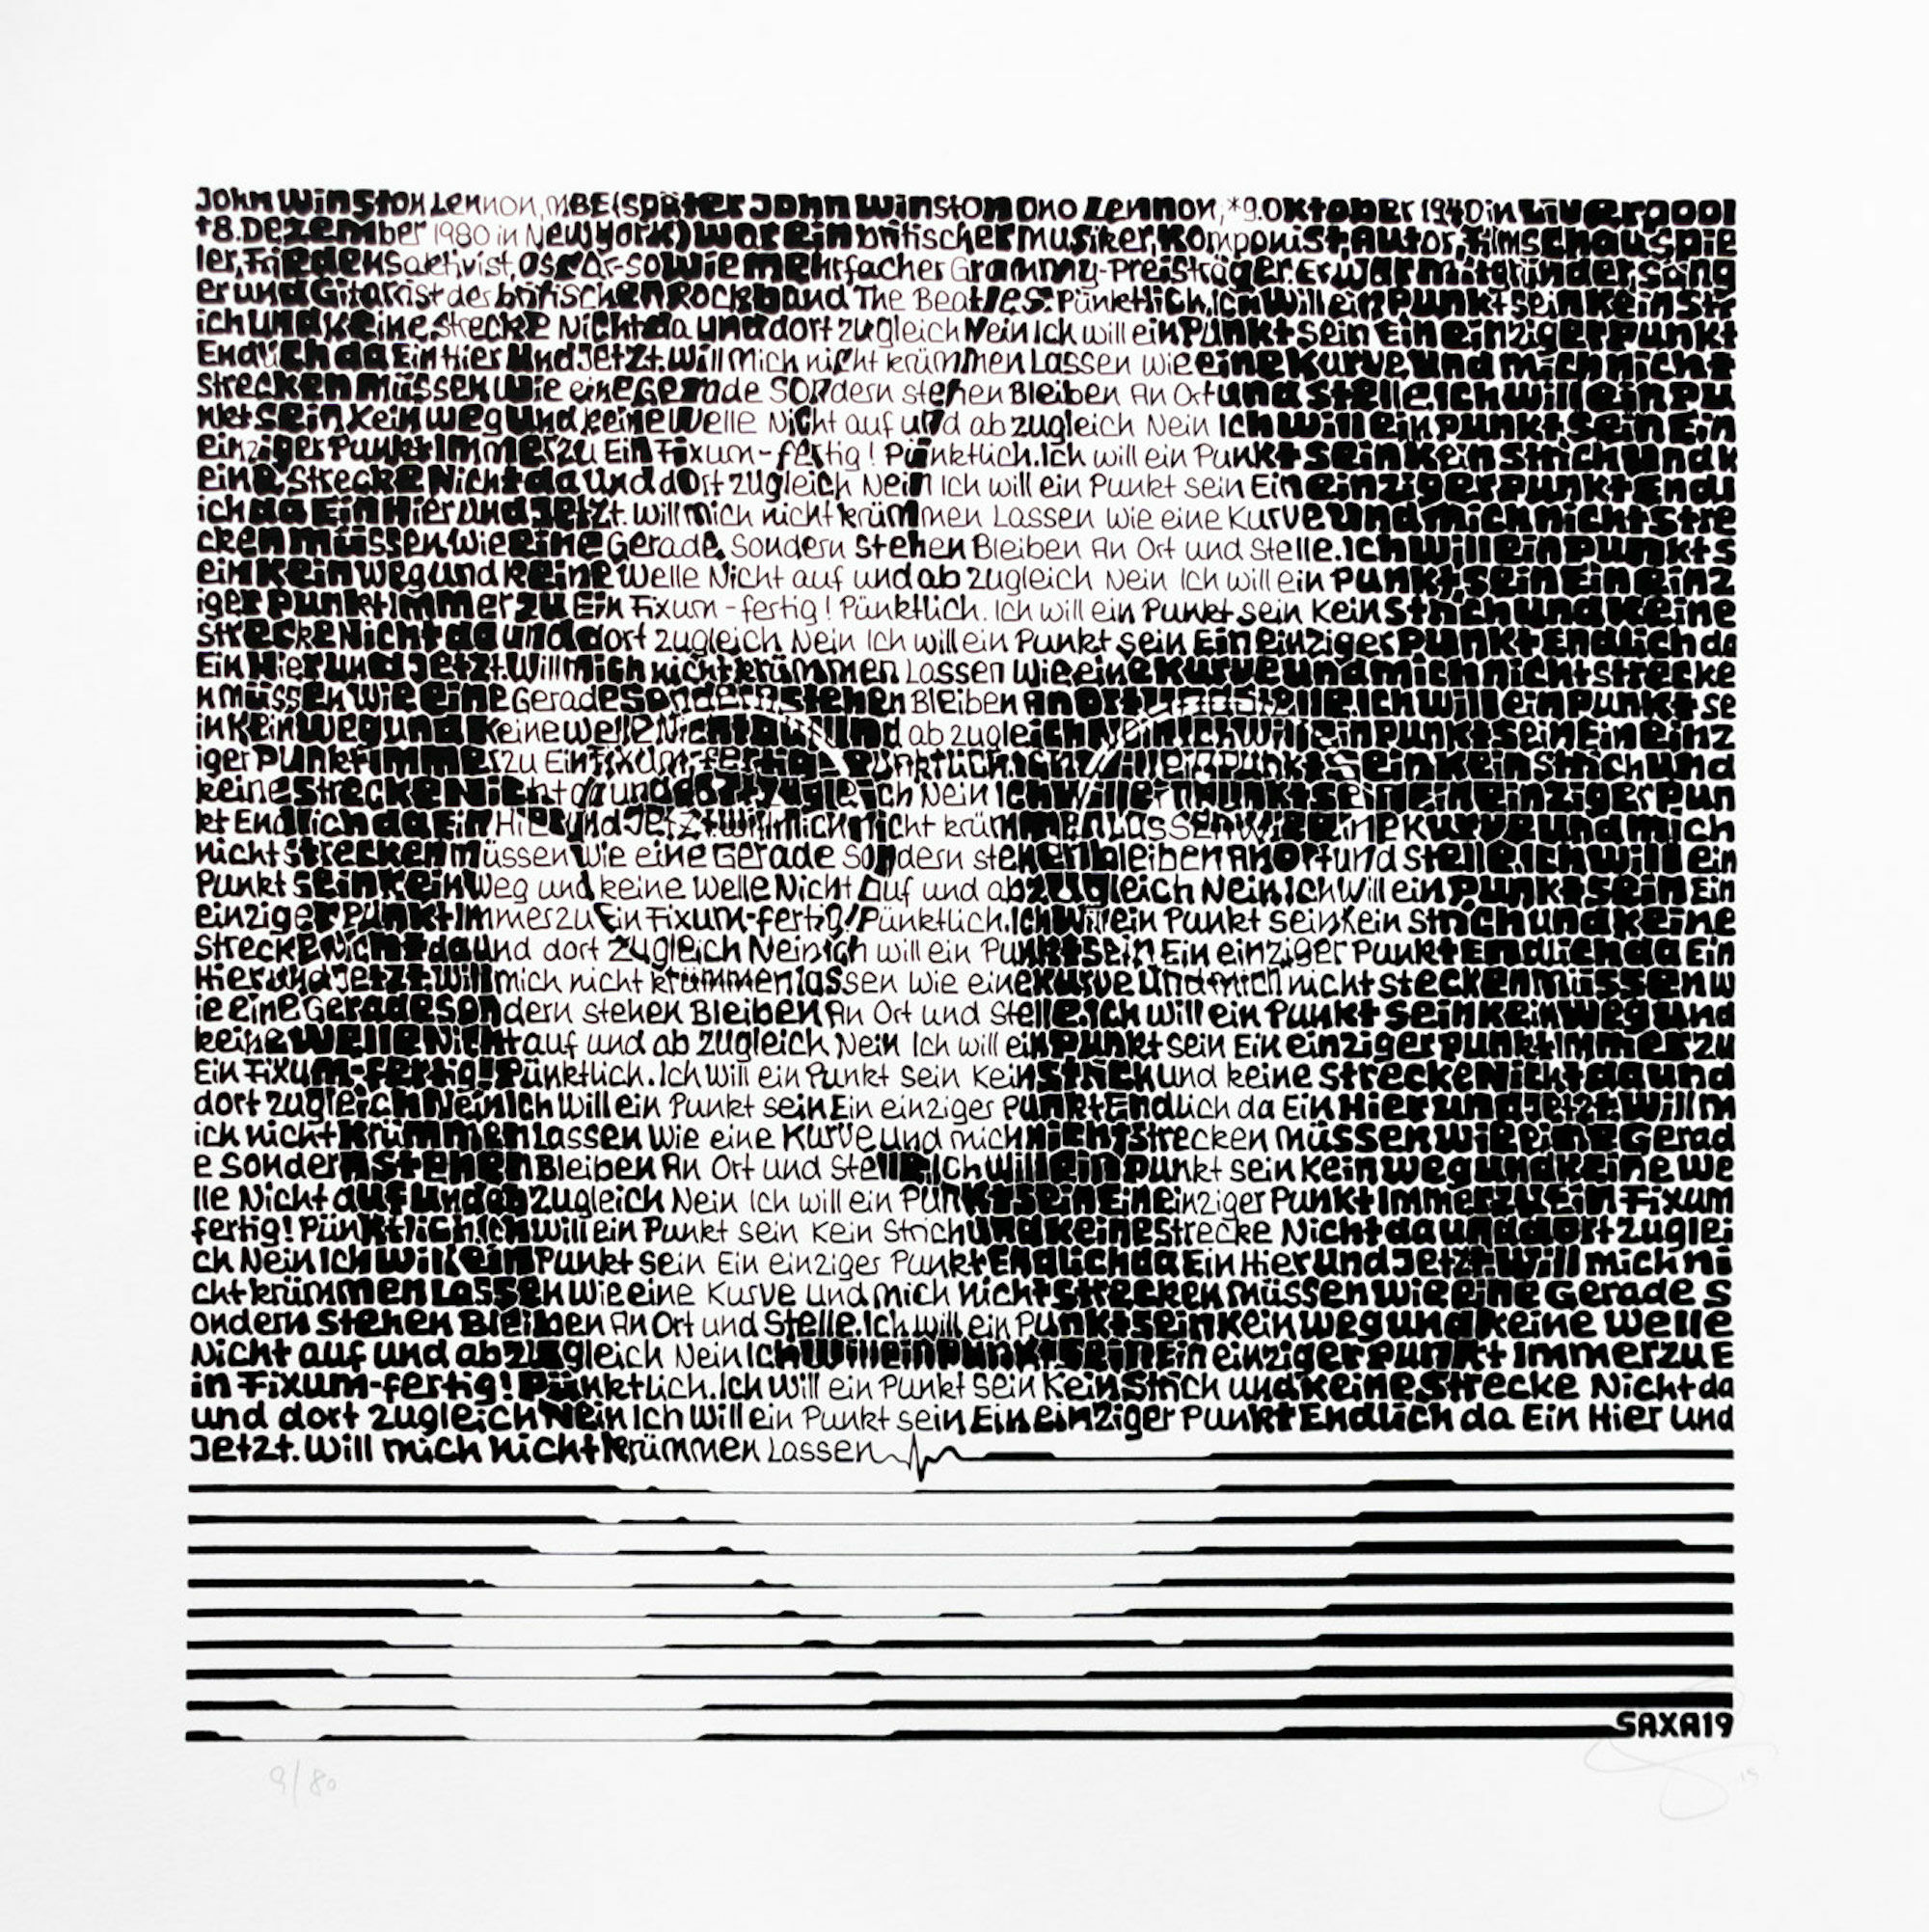 Picture "John Lennon" (2019) by SAXA